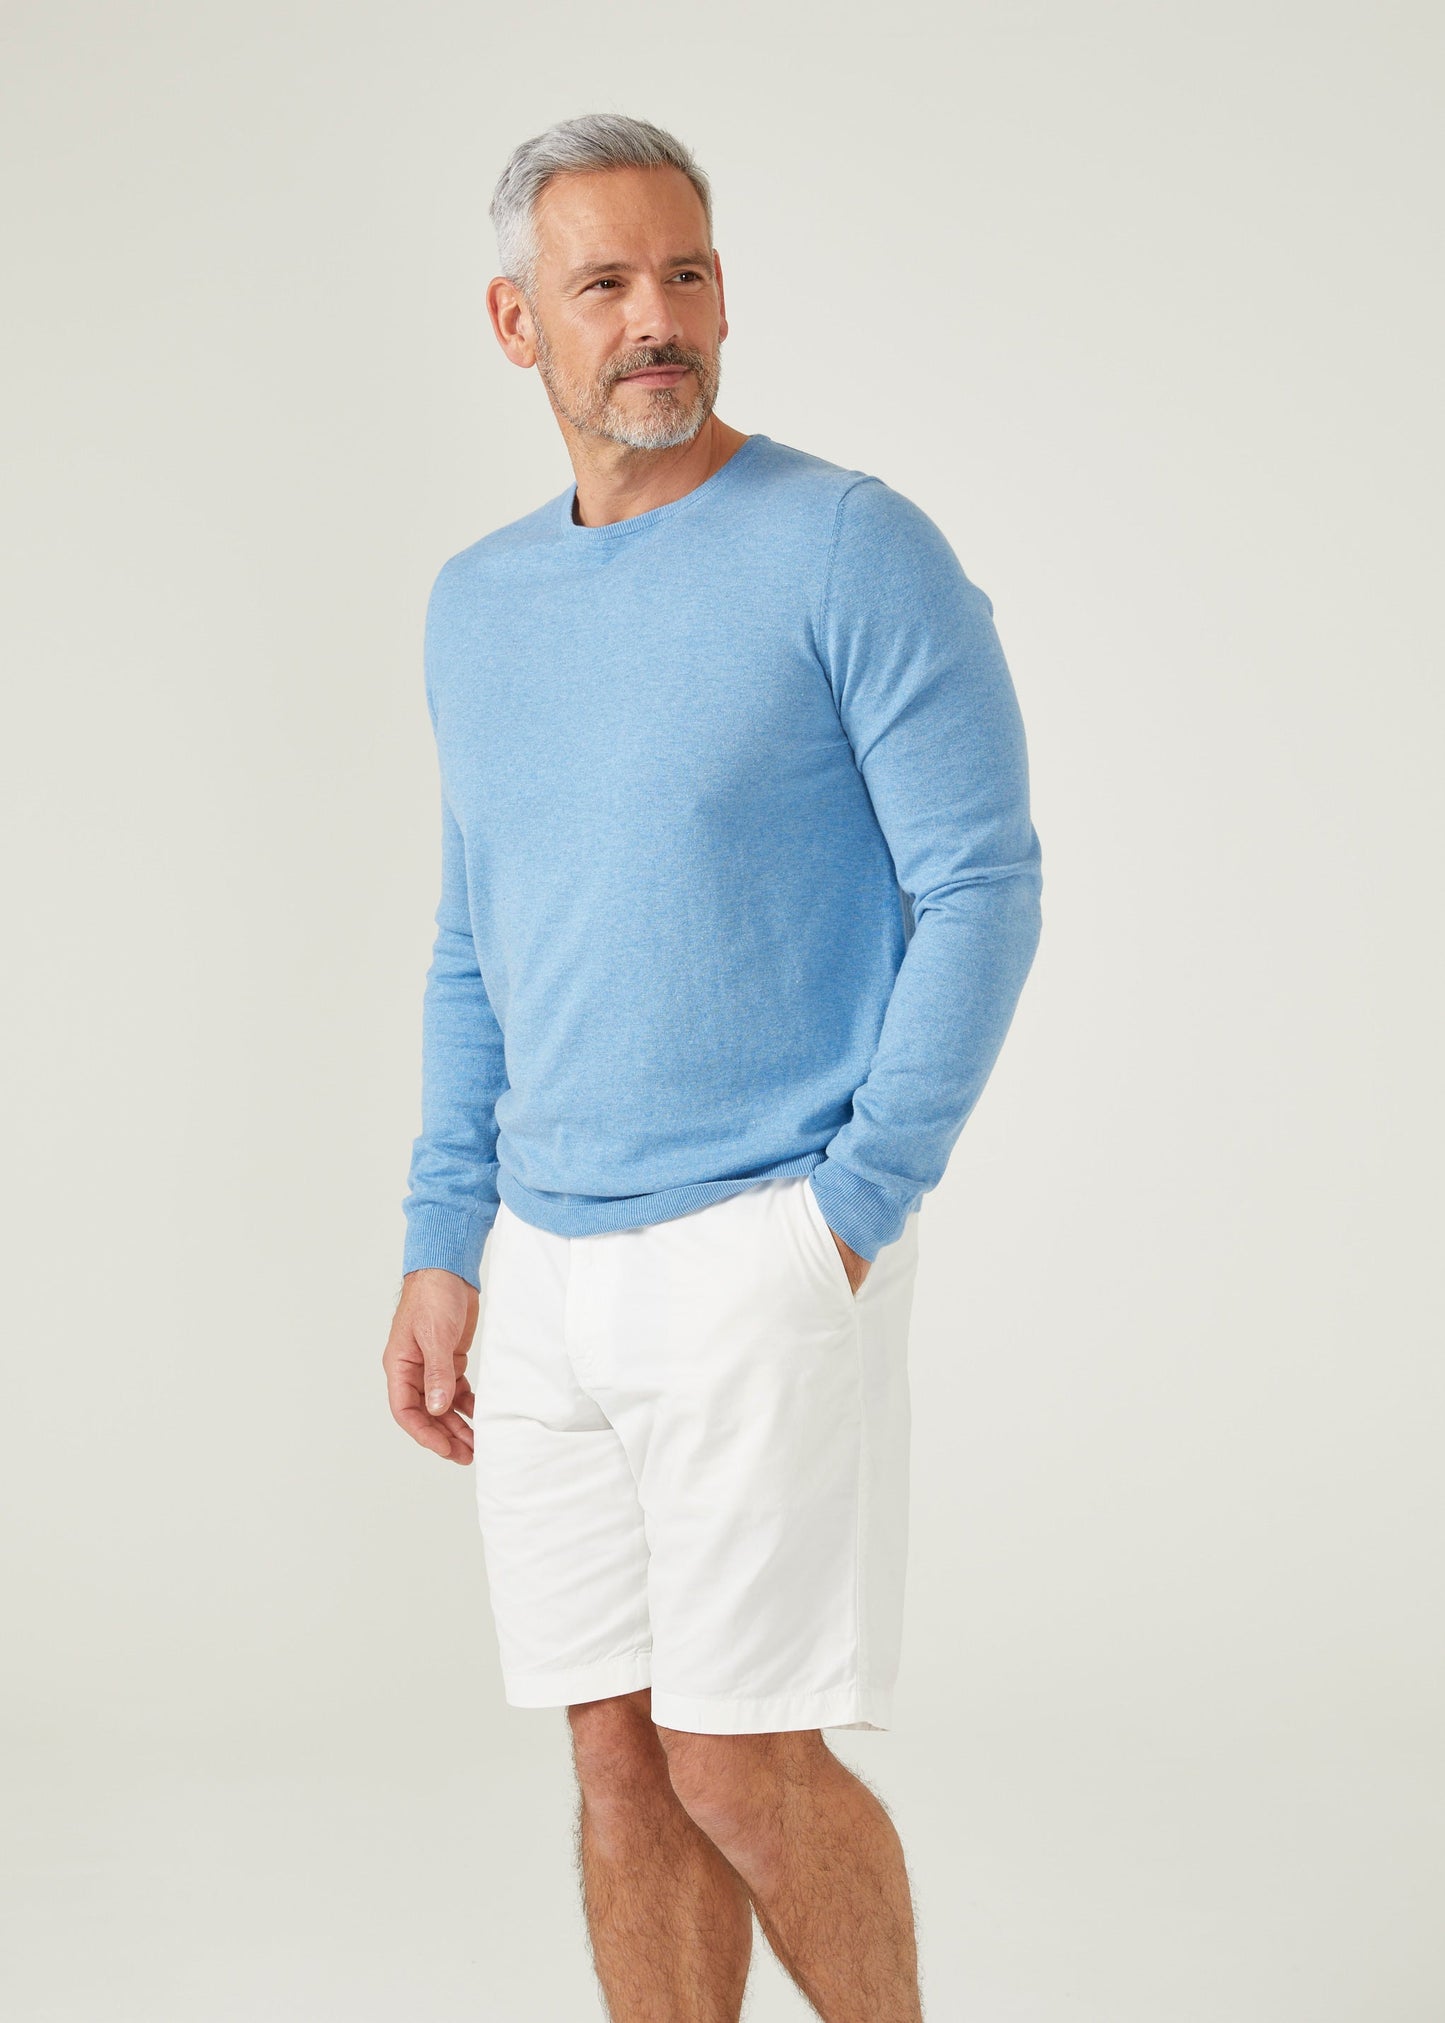 men's luxury cotton jumper in Carolina blue